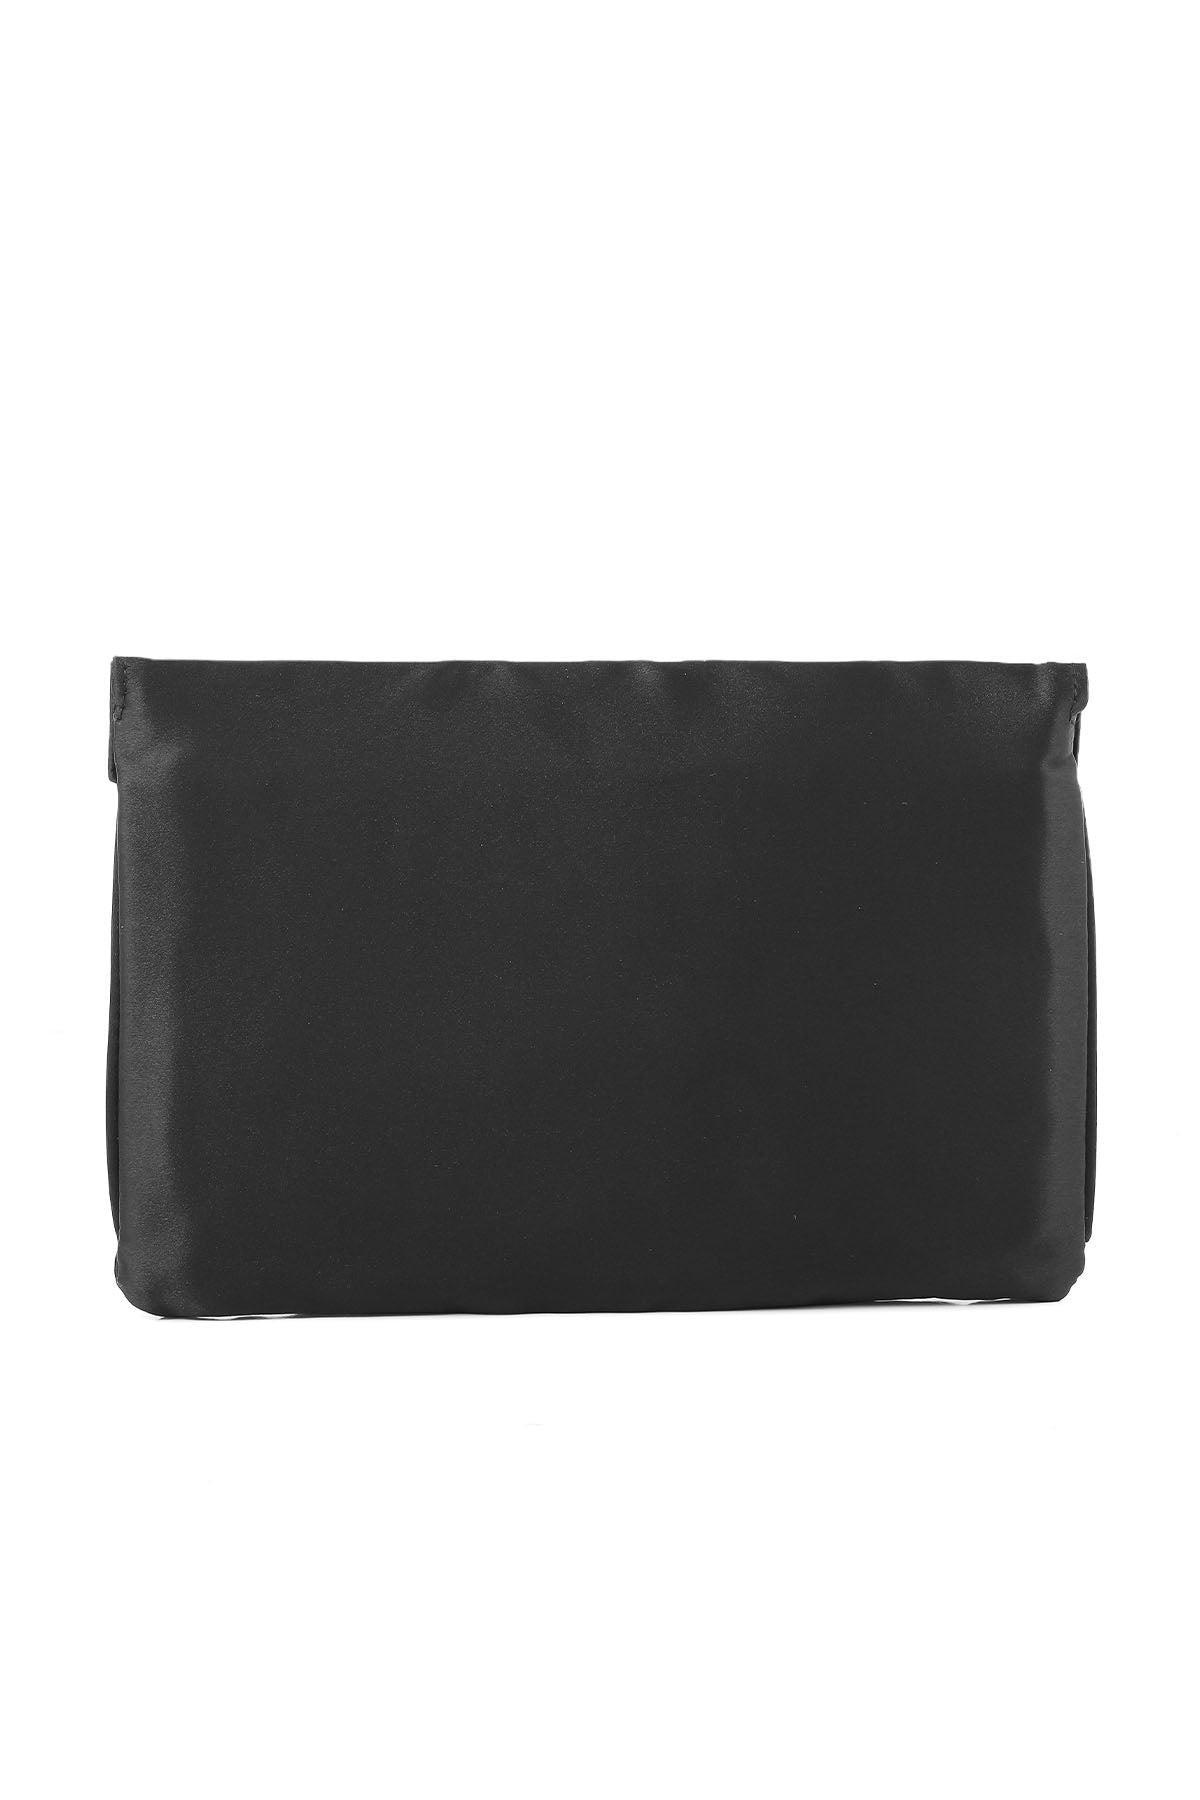 Envelope Clutch B20744-Black